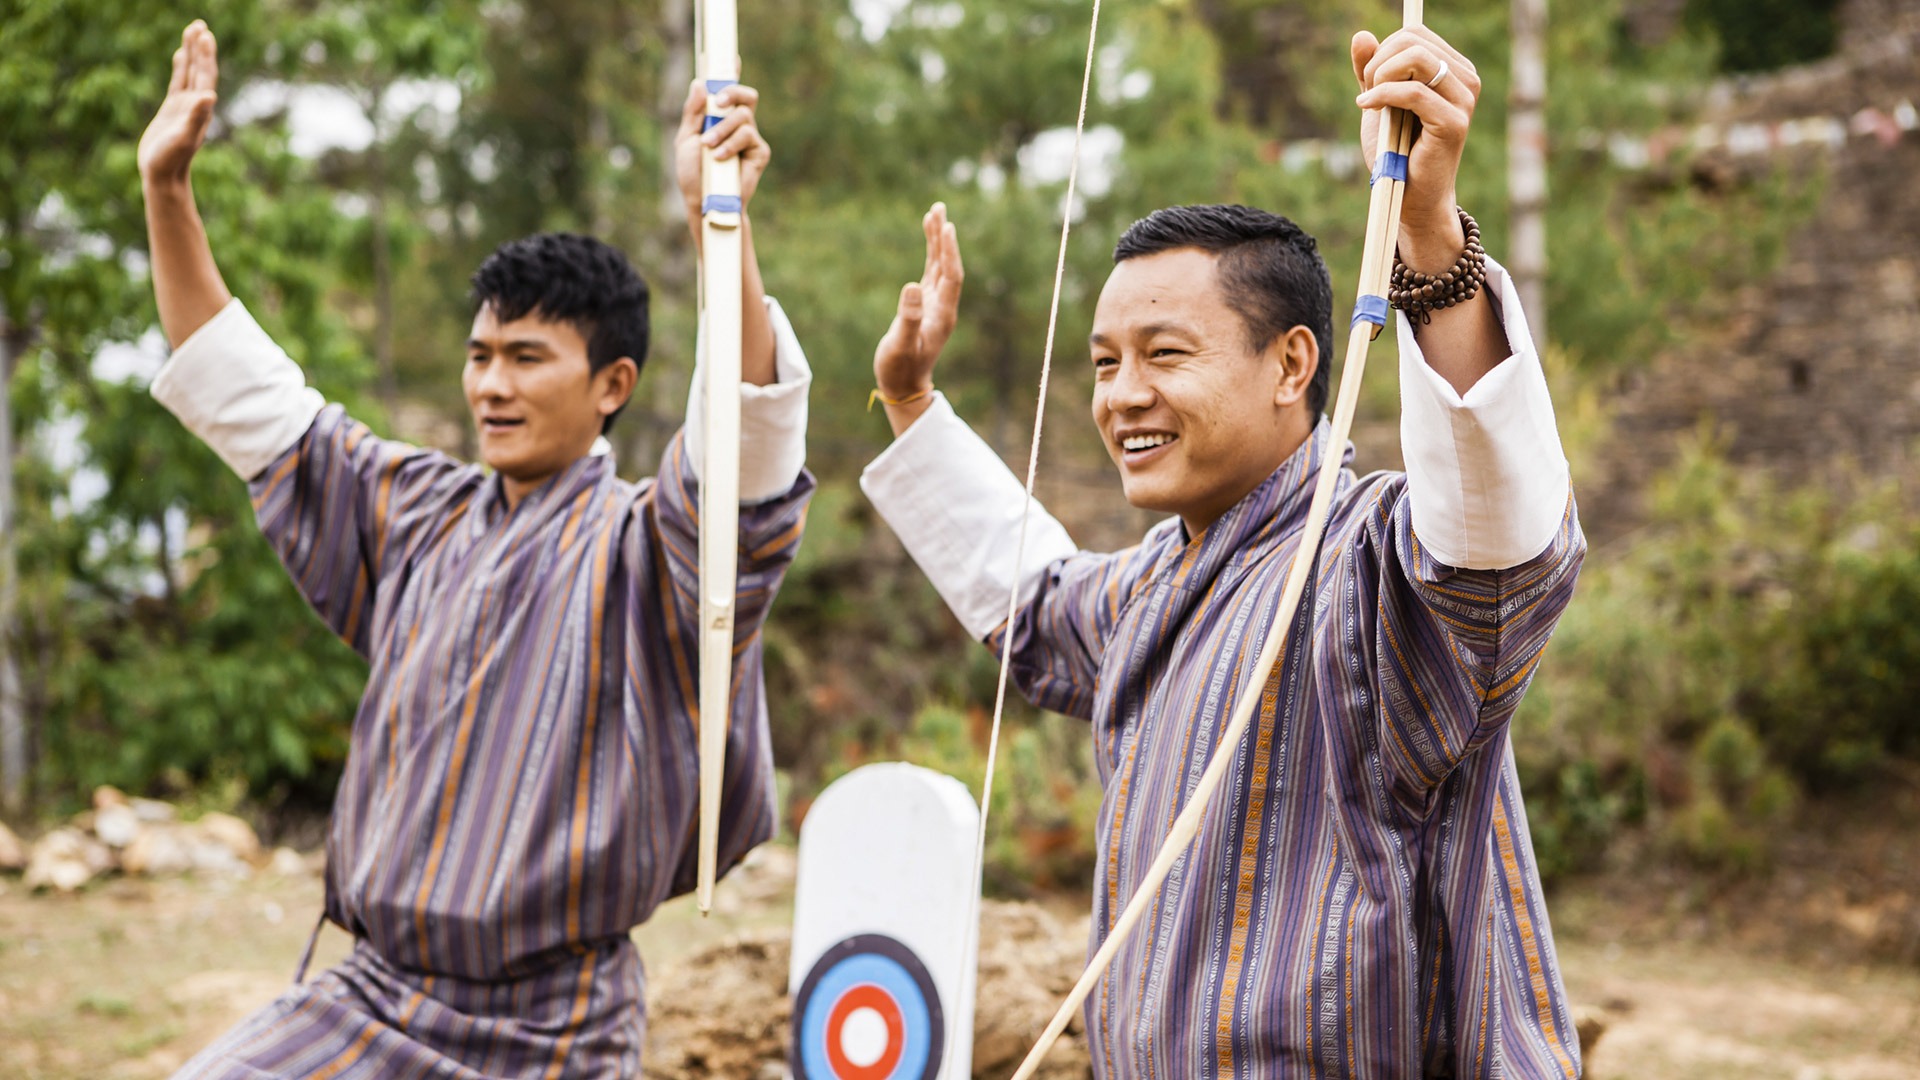 Archery near Paro, Bhutan